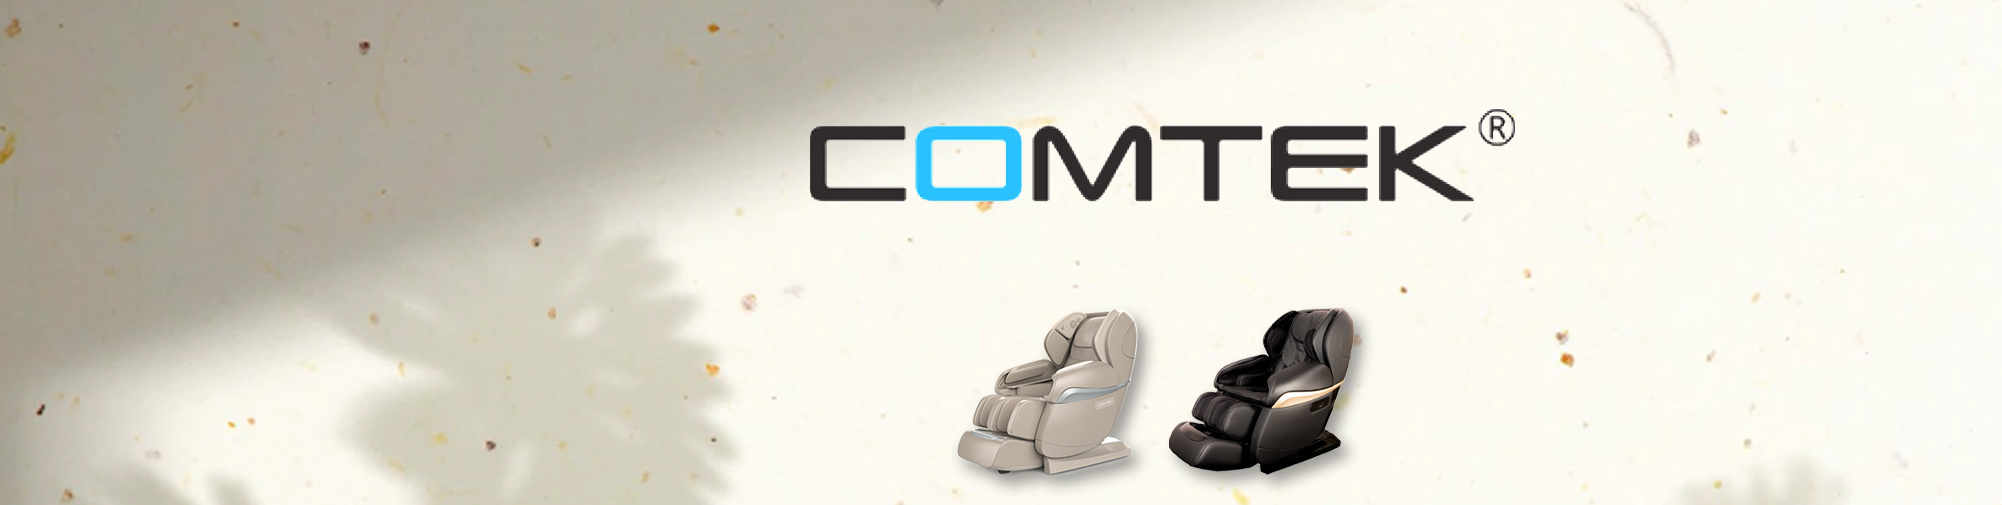 COMTEK - productor original profesional | Massage Chair World